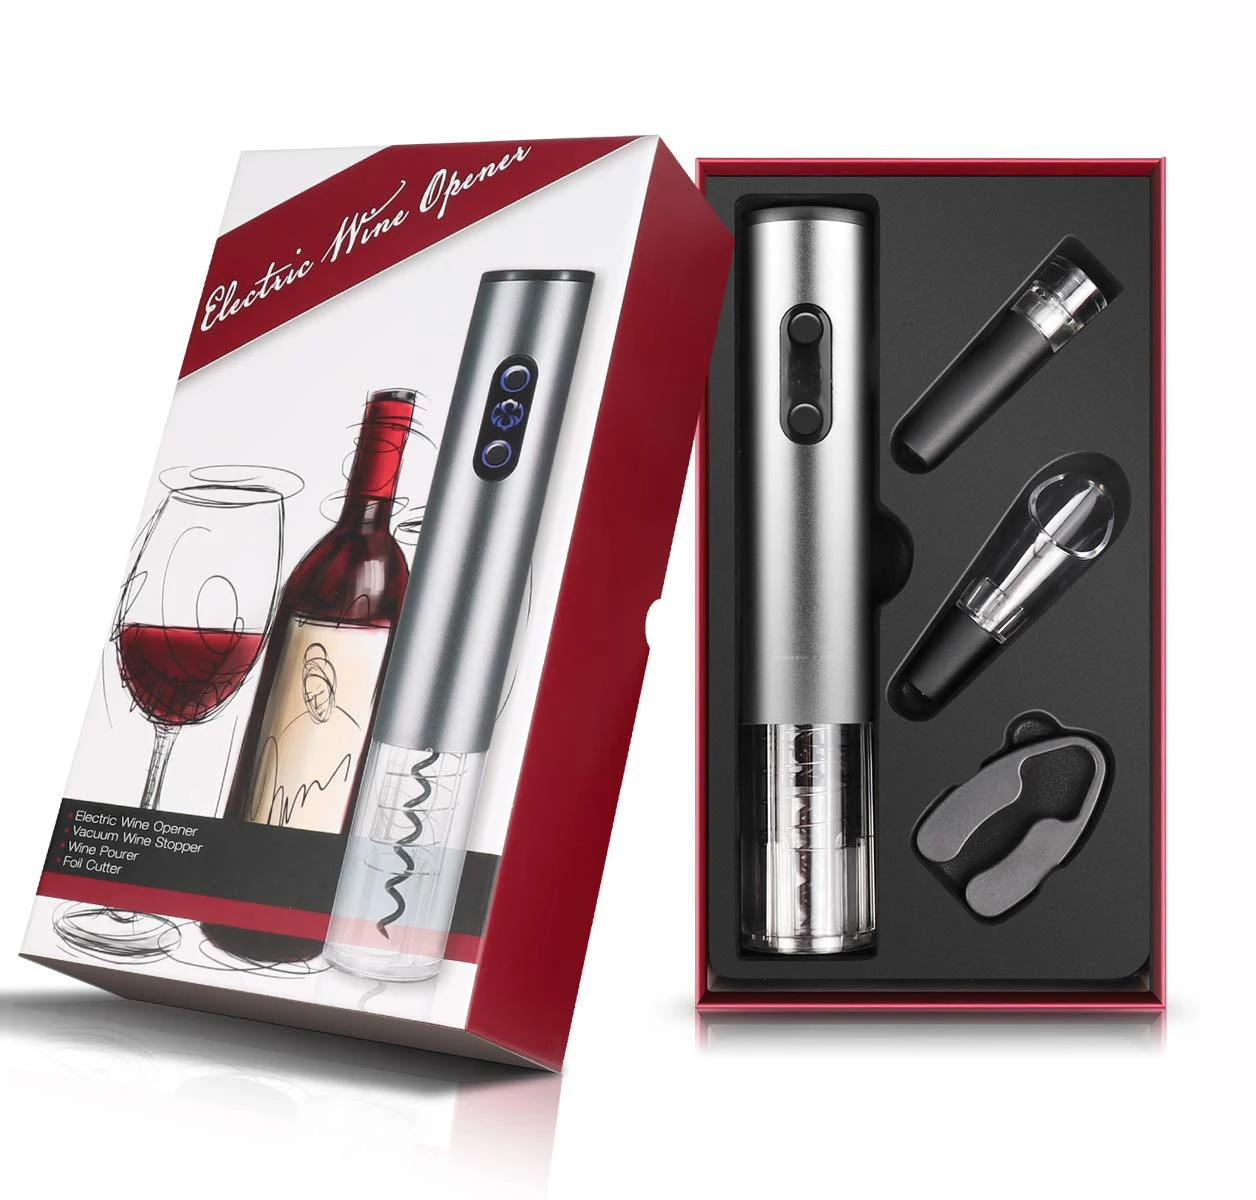 

Trending 2019 gadgets Wine Accessories Electric Wine Opener corkscrew Set Amazon wedding favors wine stopper set gift, Red/gray/blue/oem